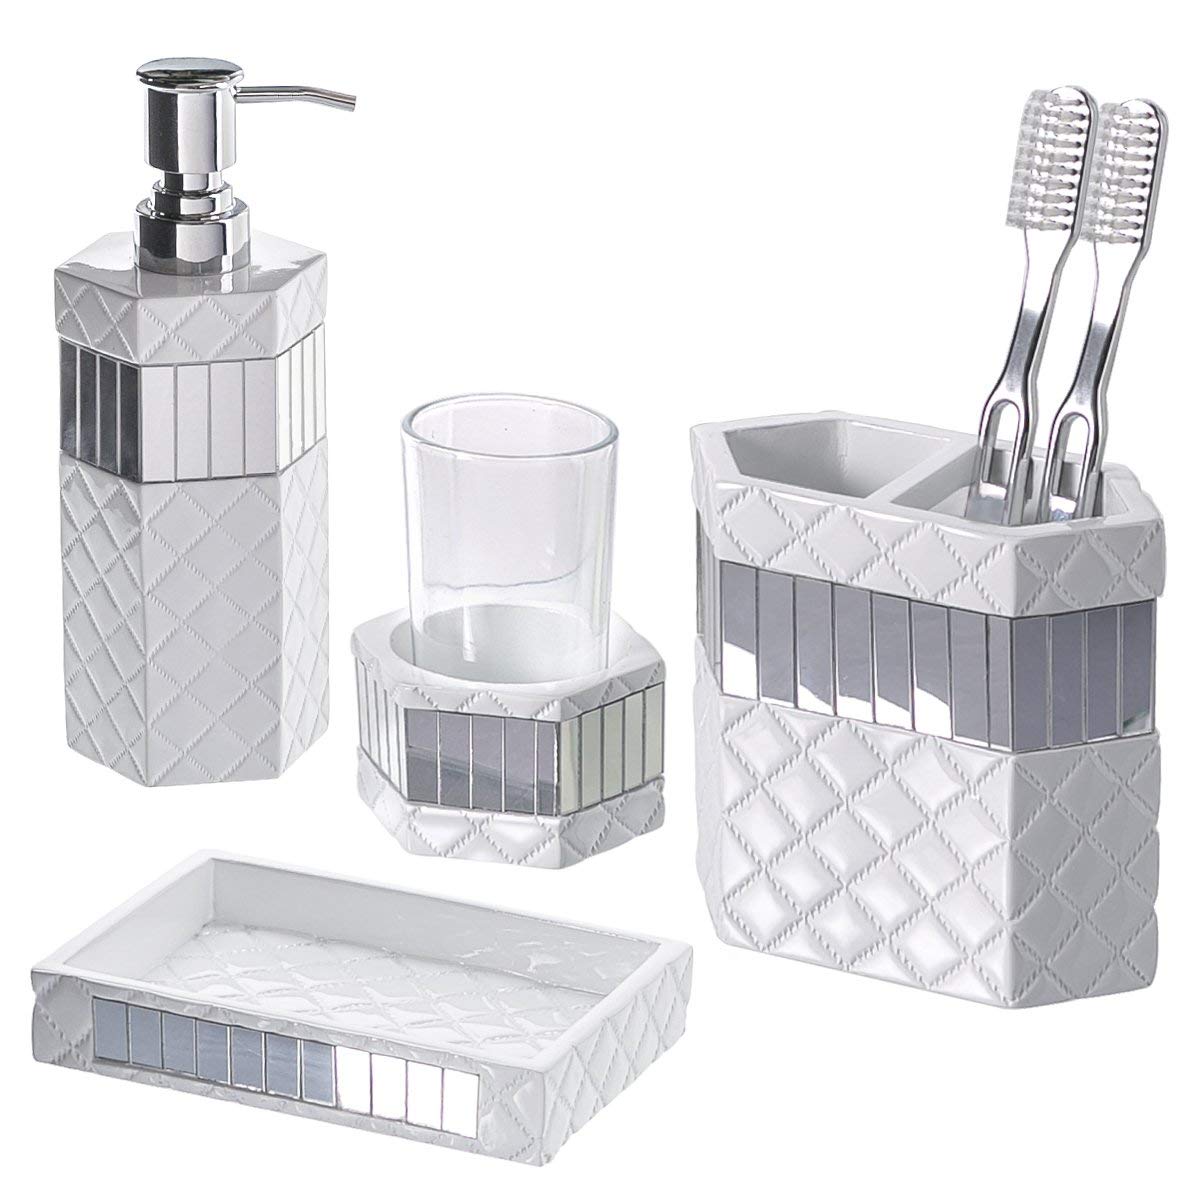 amazon.com: Creative fragrances Step mirror bathroom accessories set, 4 pieces, incl. BCWKVMI soap